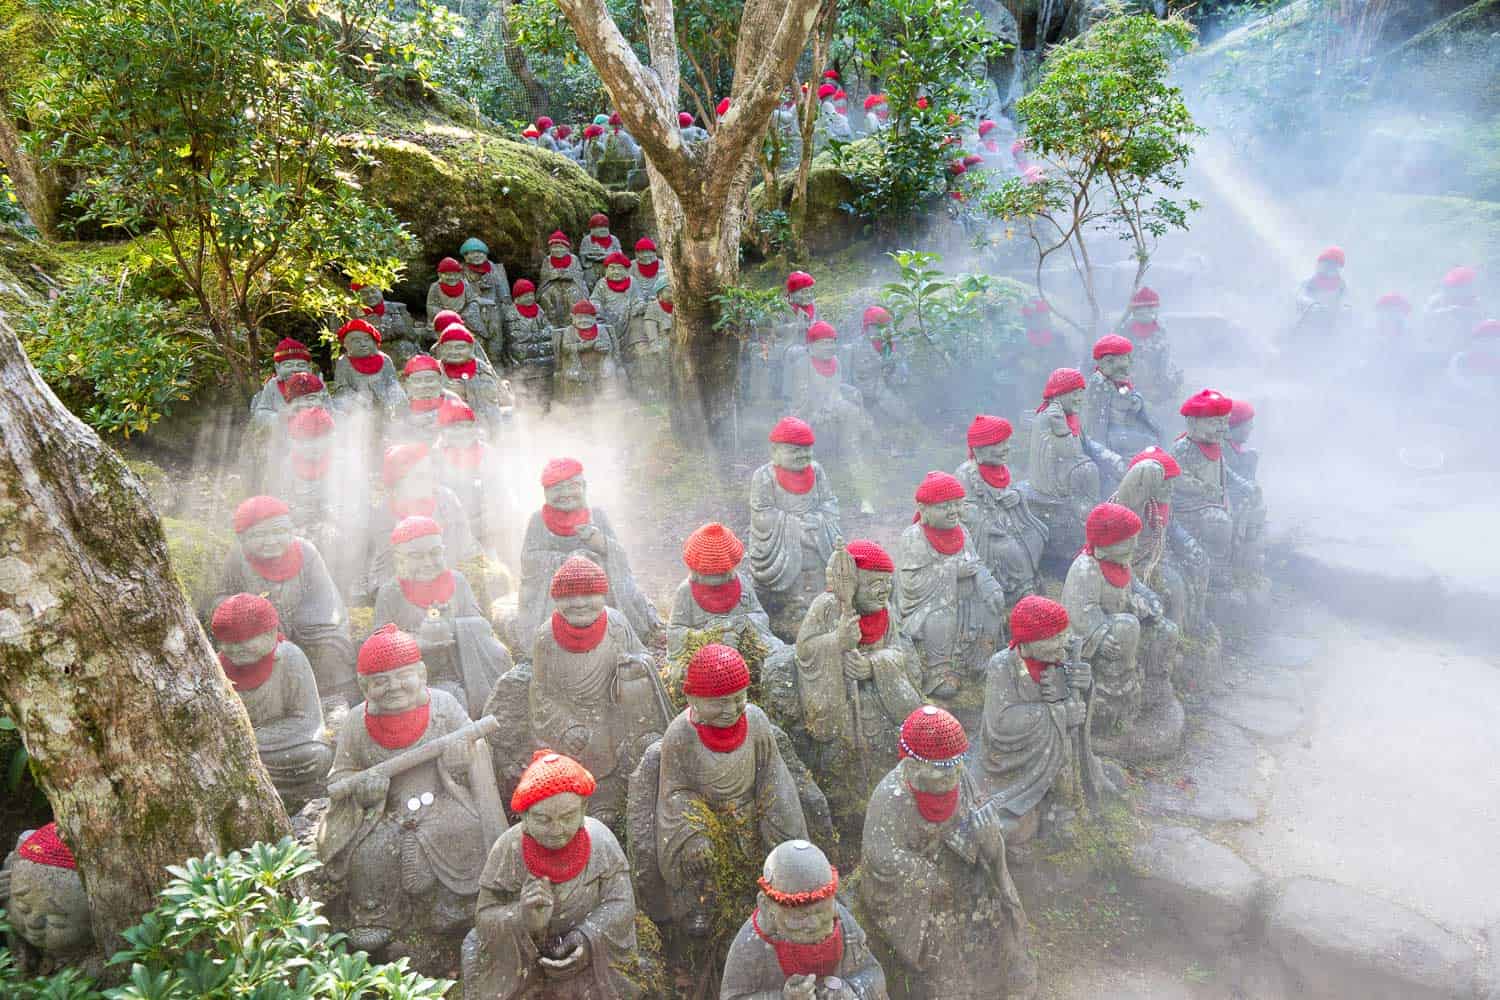 Red capped rakan statues in mist at Daishoin Temple on Miyajima Island